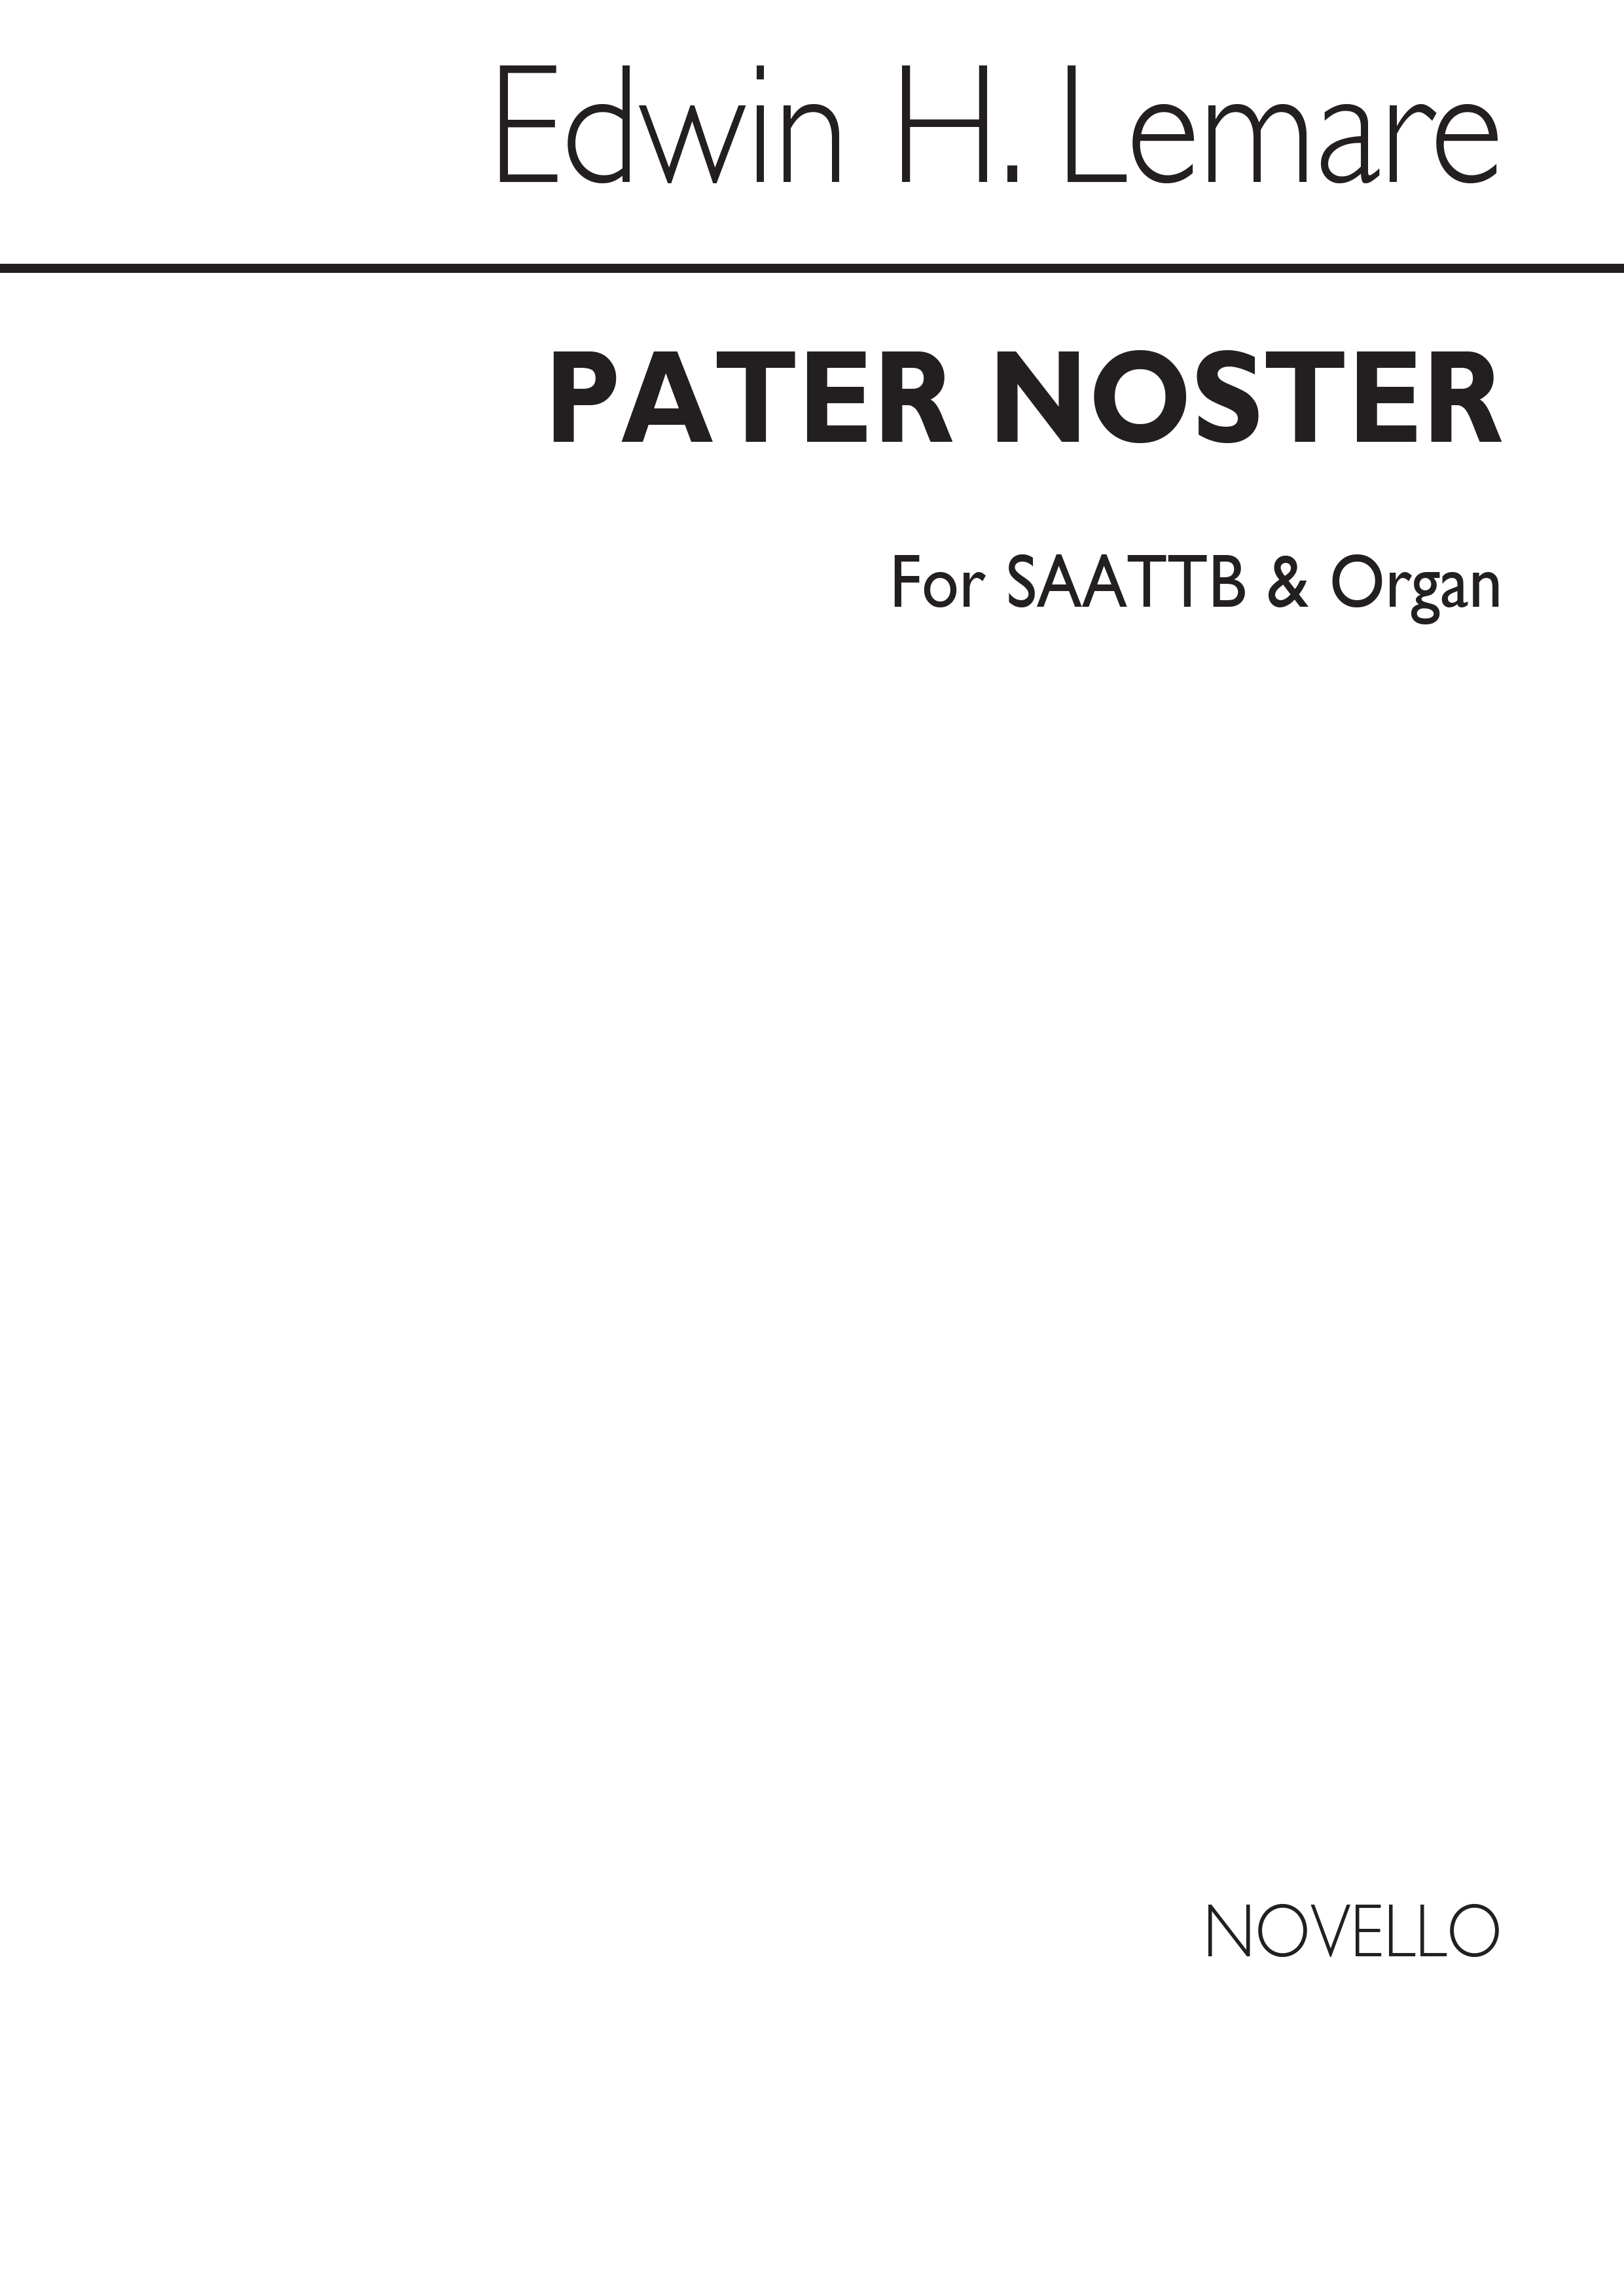 Edwin Lemare: Pater Noster SAATB/Organ (Lords Prayer)